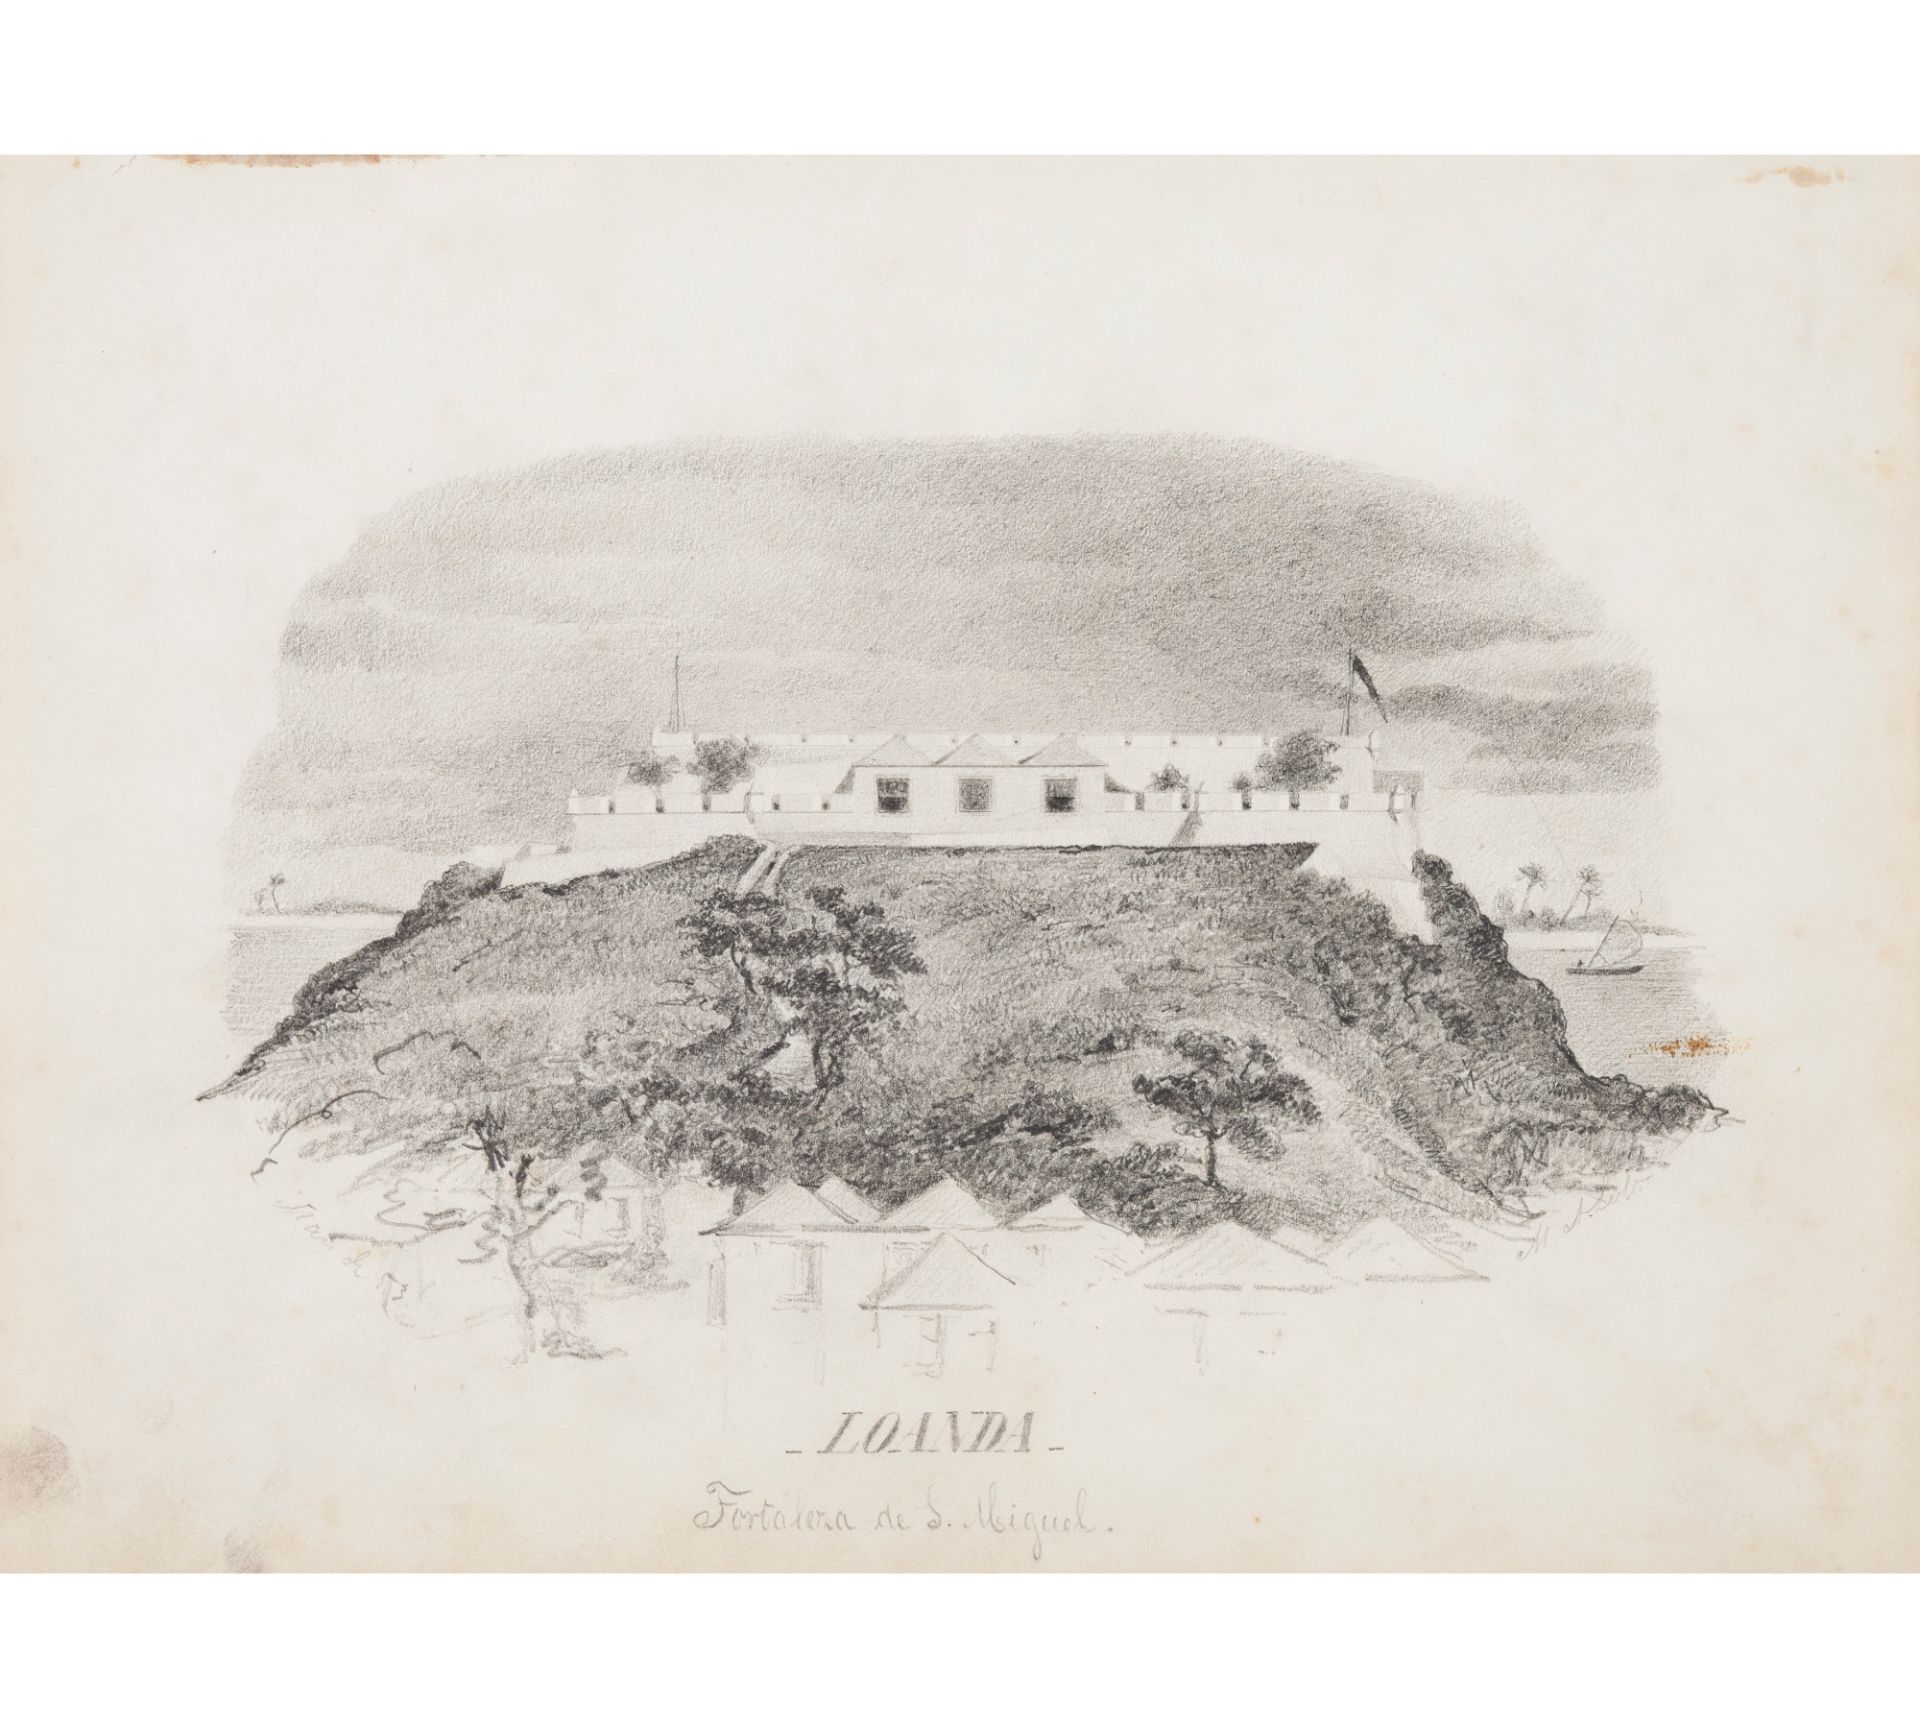 Miguel Ângelo Lupi (1826-1883)"Loanda - Saint Michael Fortress"